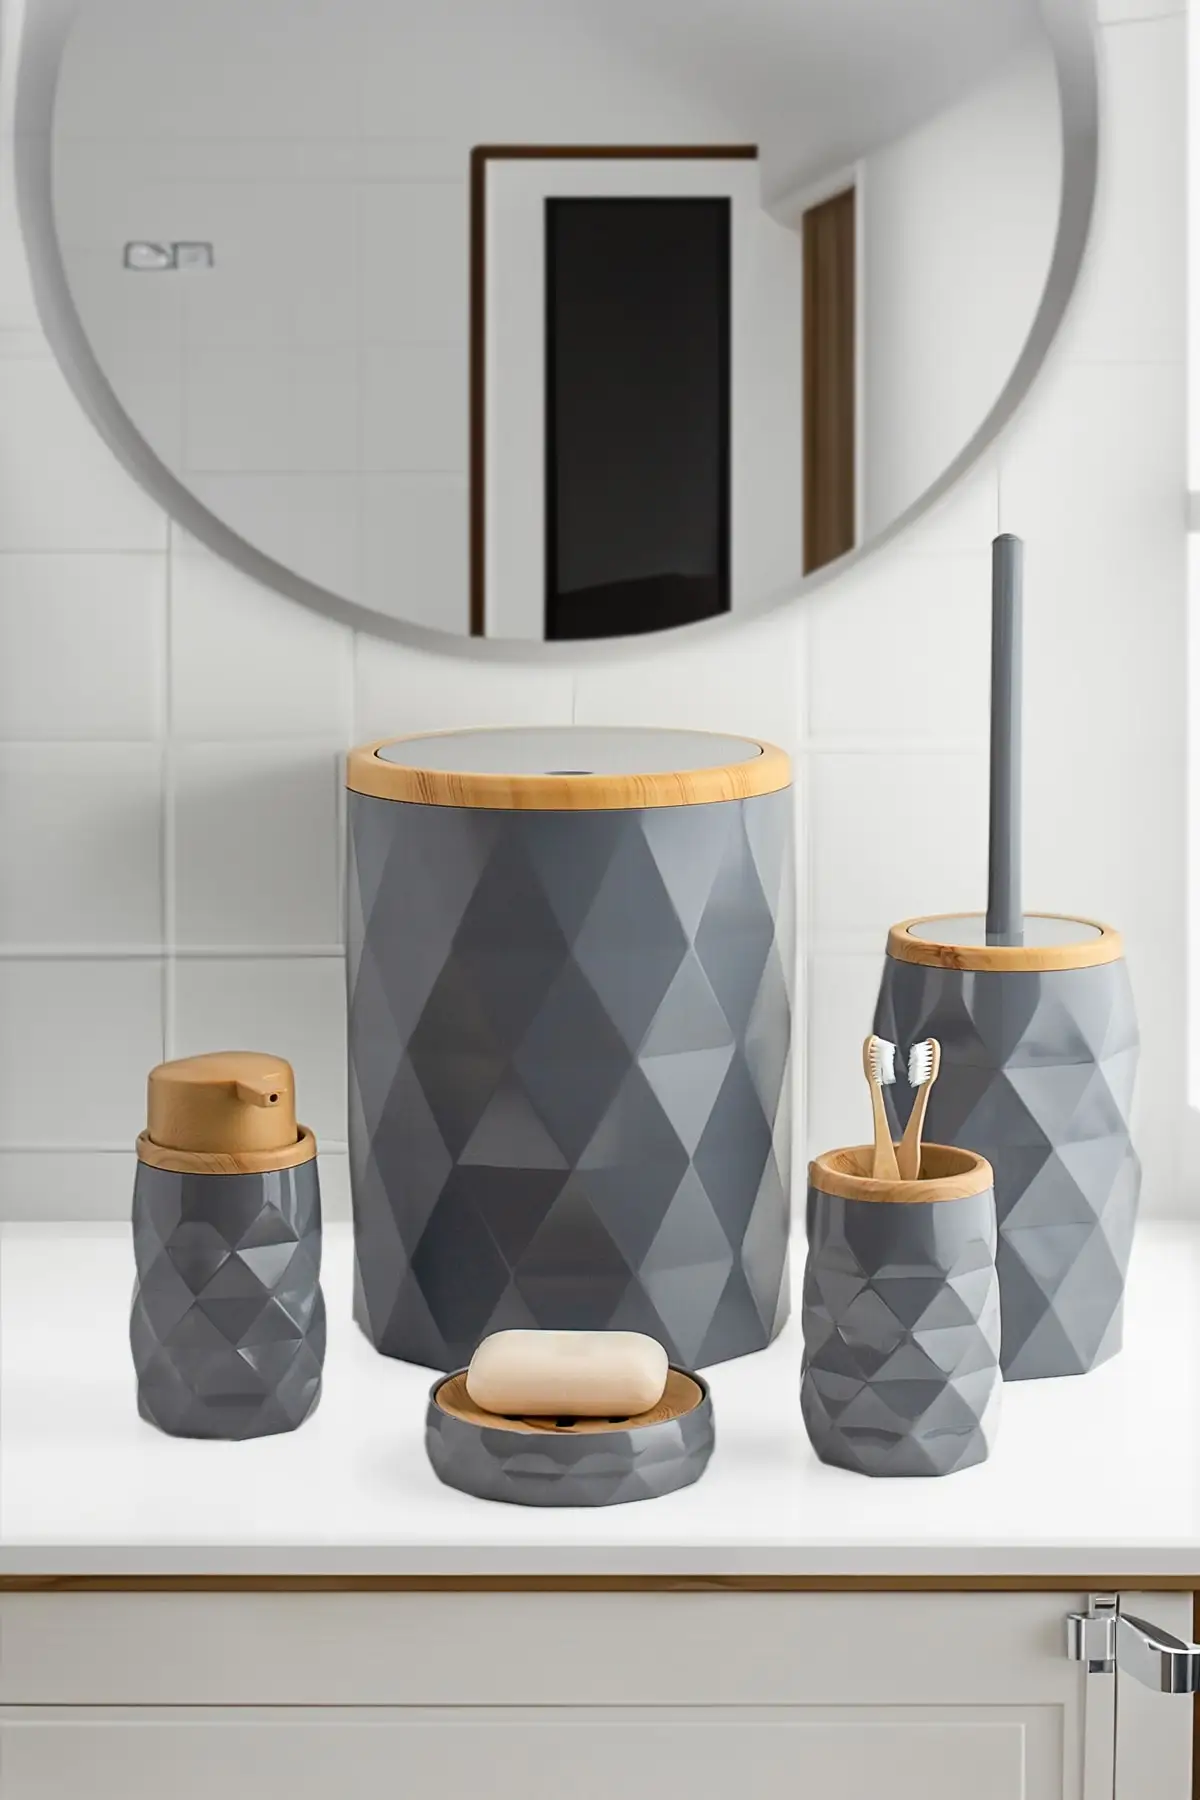 

5-Piece Bathroom Set Wood Patterned Prism Round Bathroom Set